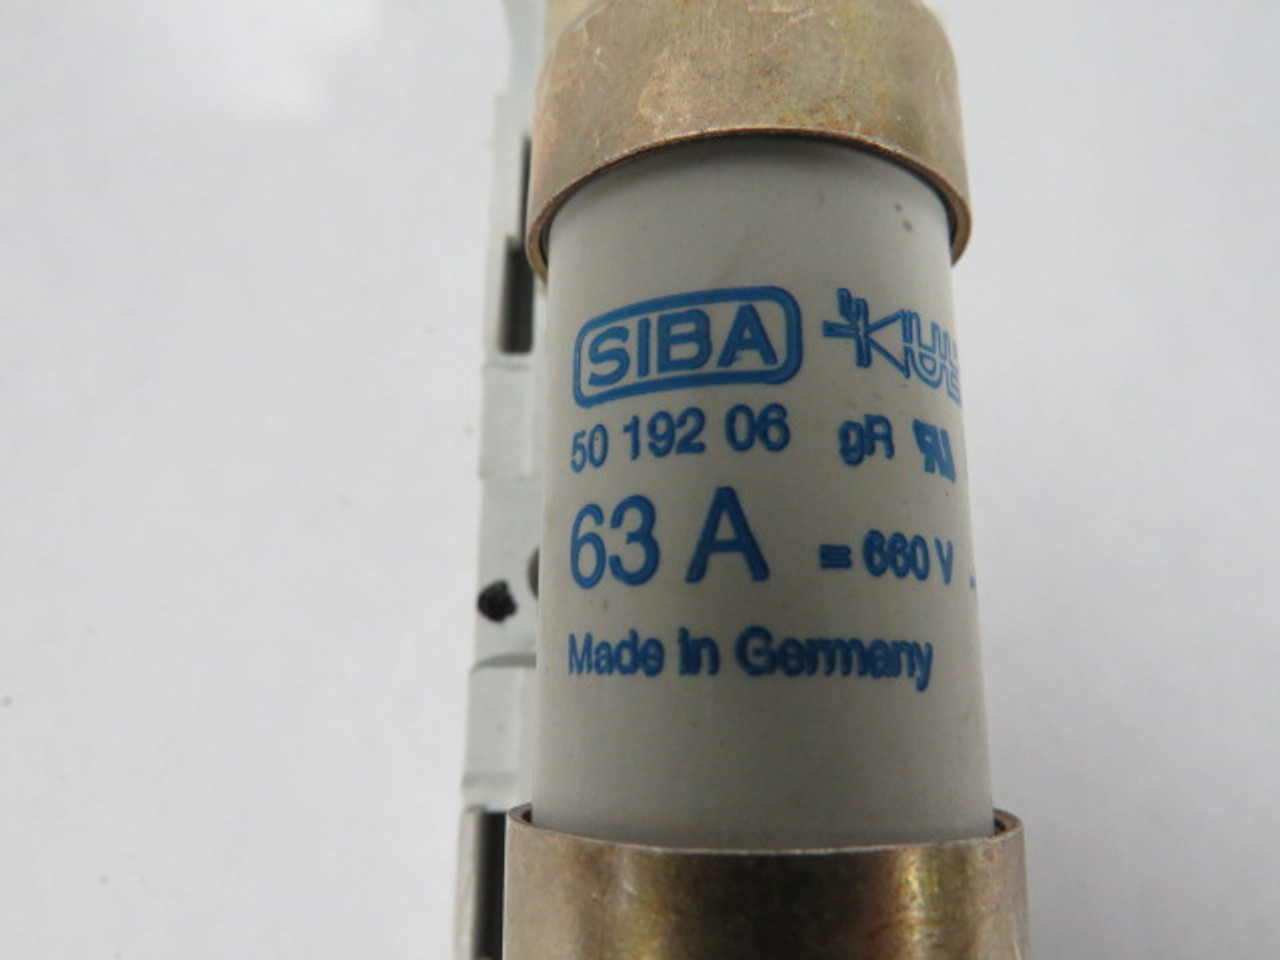 Siba 5019206 Ceramic Fuse w/Mount 63A 600V USED